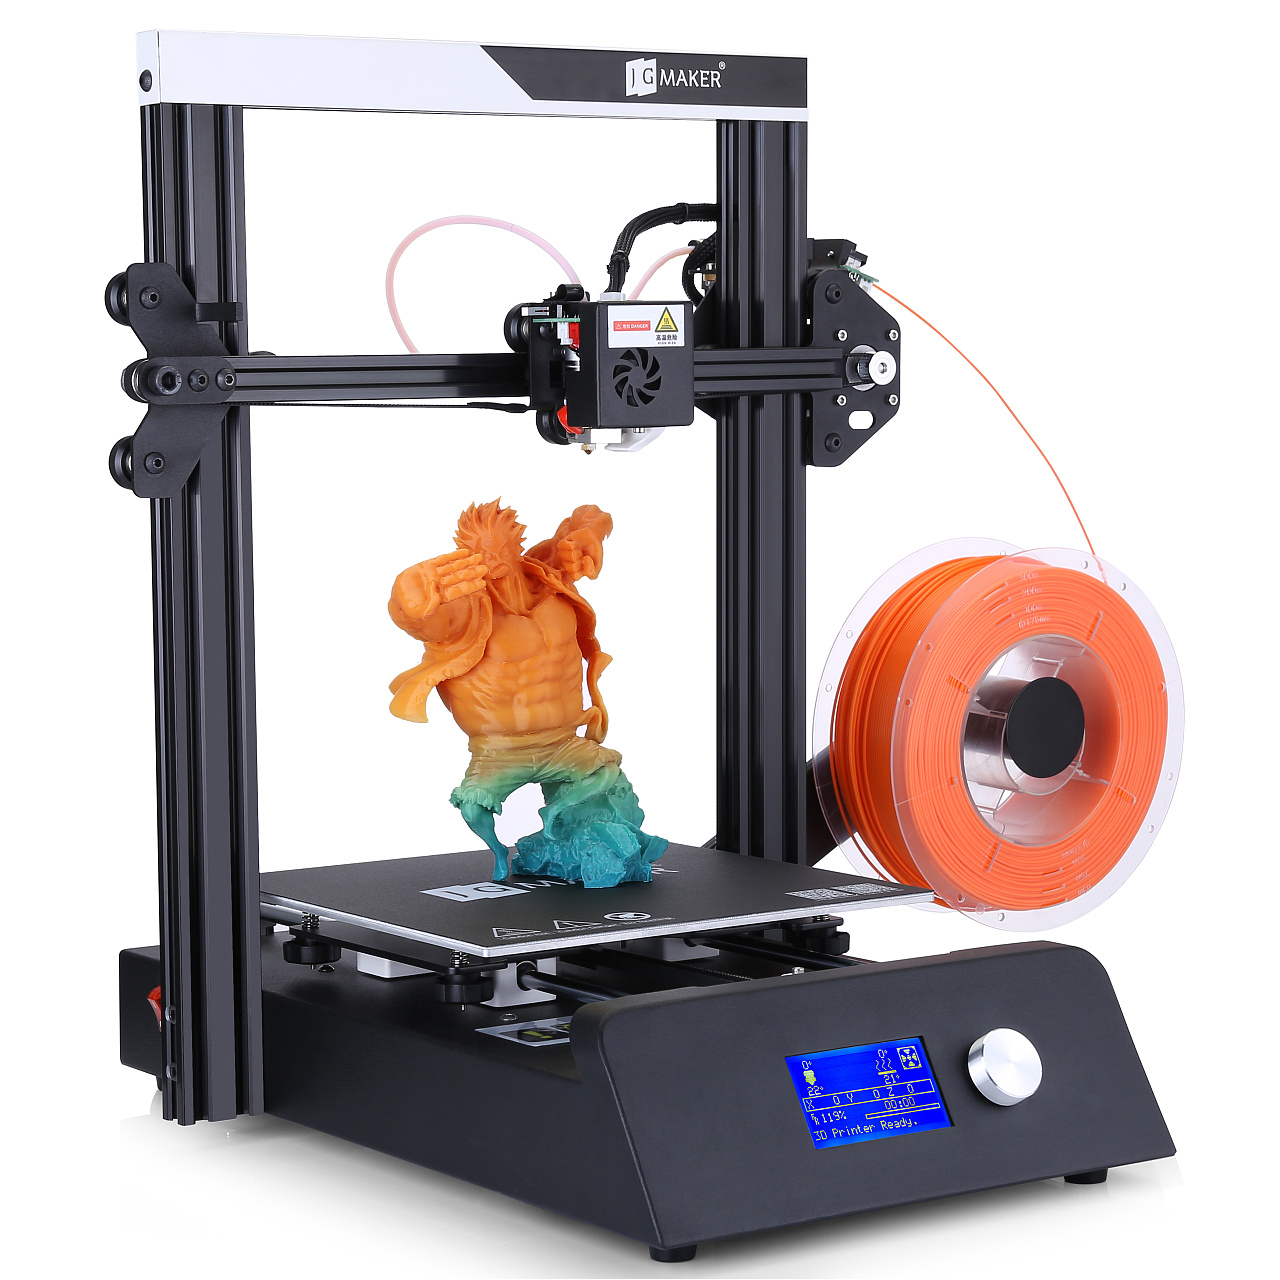 Massivit 3D推出超大型3D打印机：MASSIVIT 5000-aau3d打印